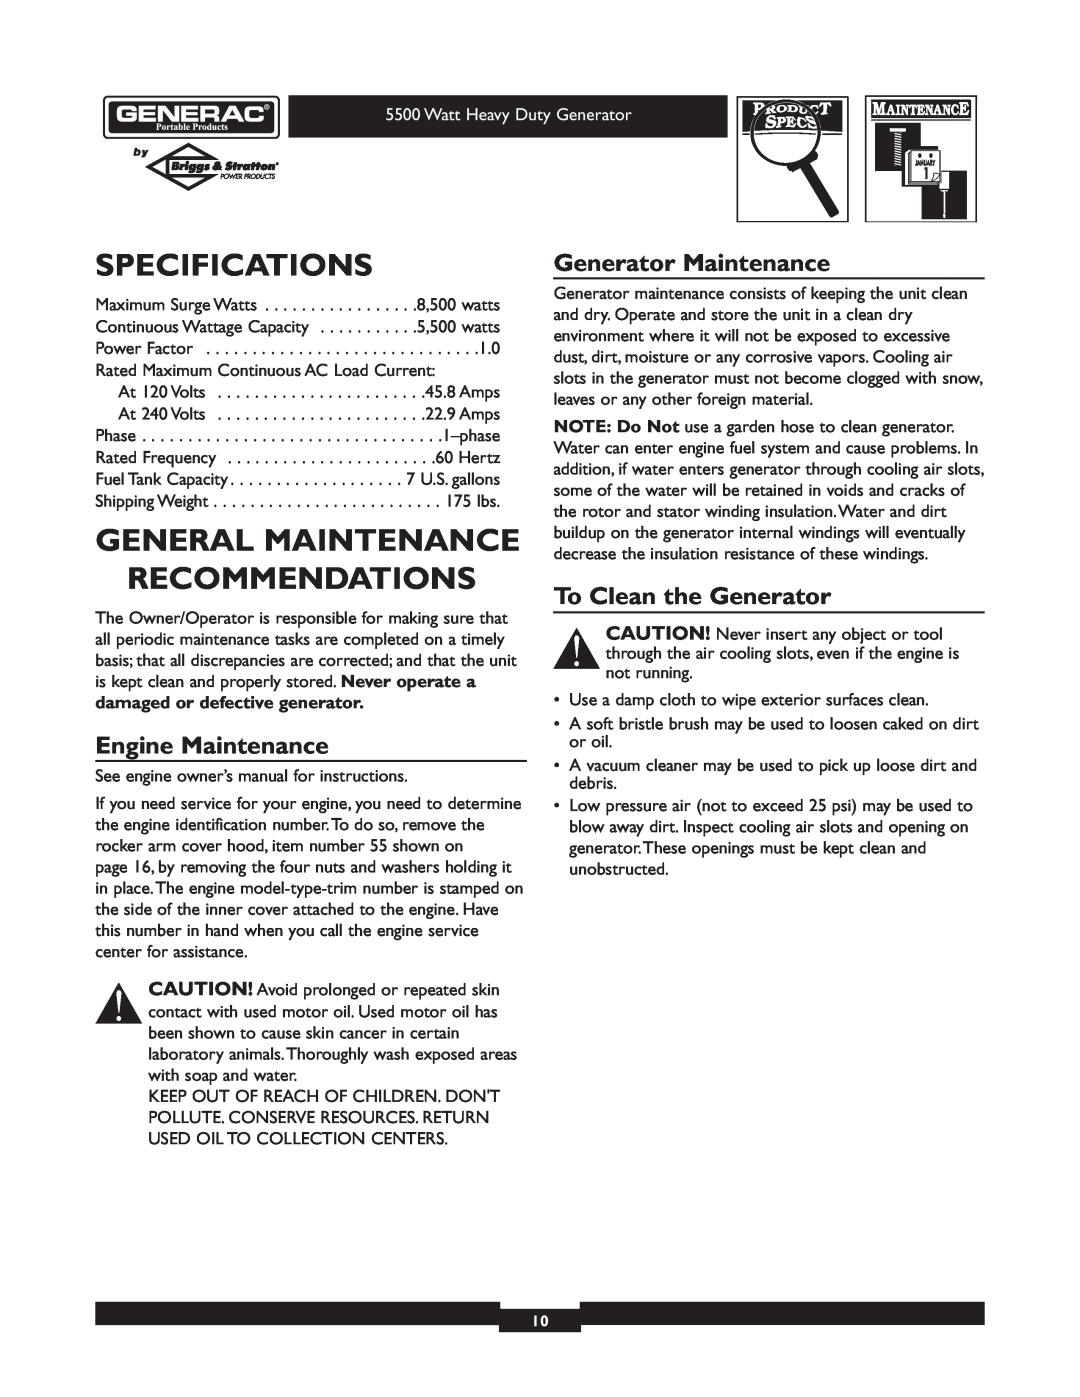 Generac 1654-0 owner manual Specifications, General Maintenance, Recommendations, Generator Maintenance, Engine Maintenance 